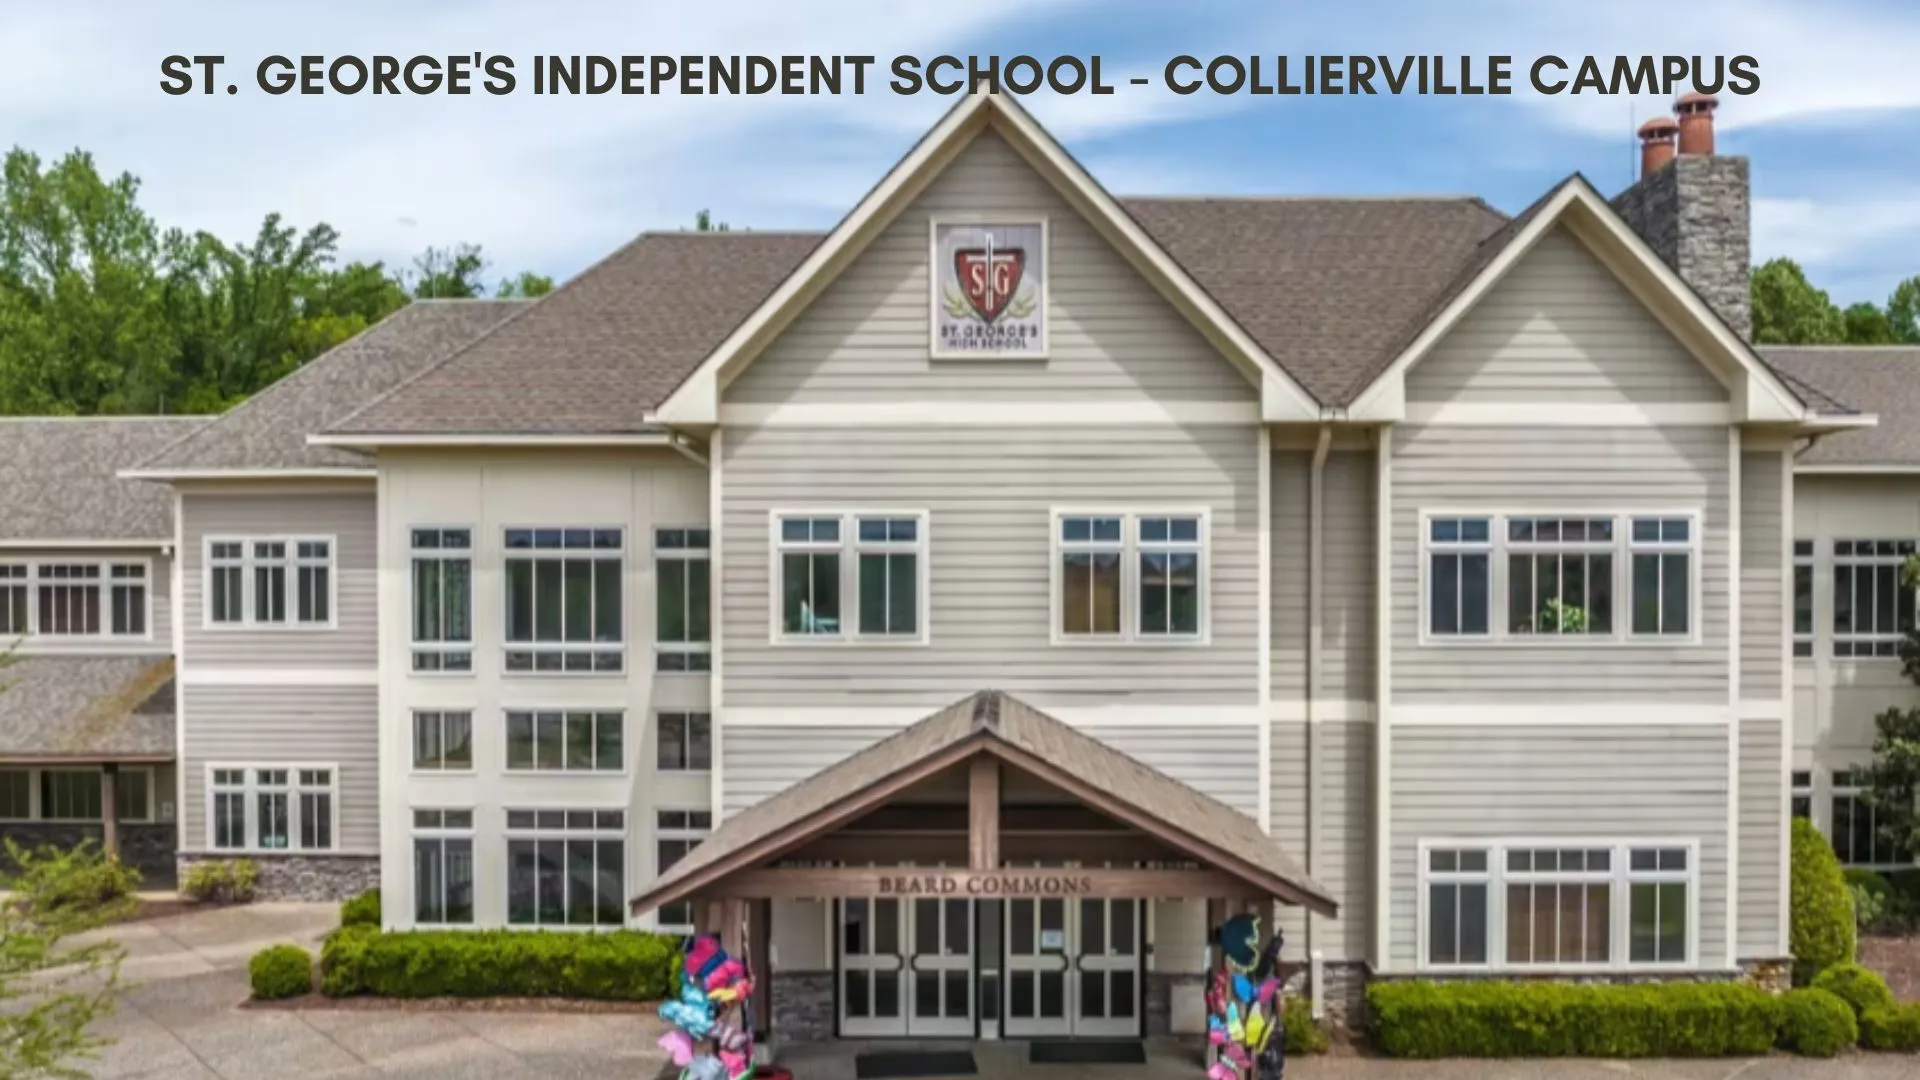 St. George's Independent School - Collierville Campus